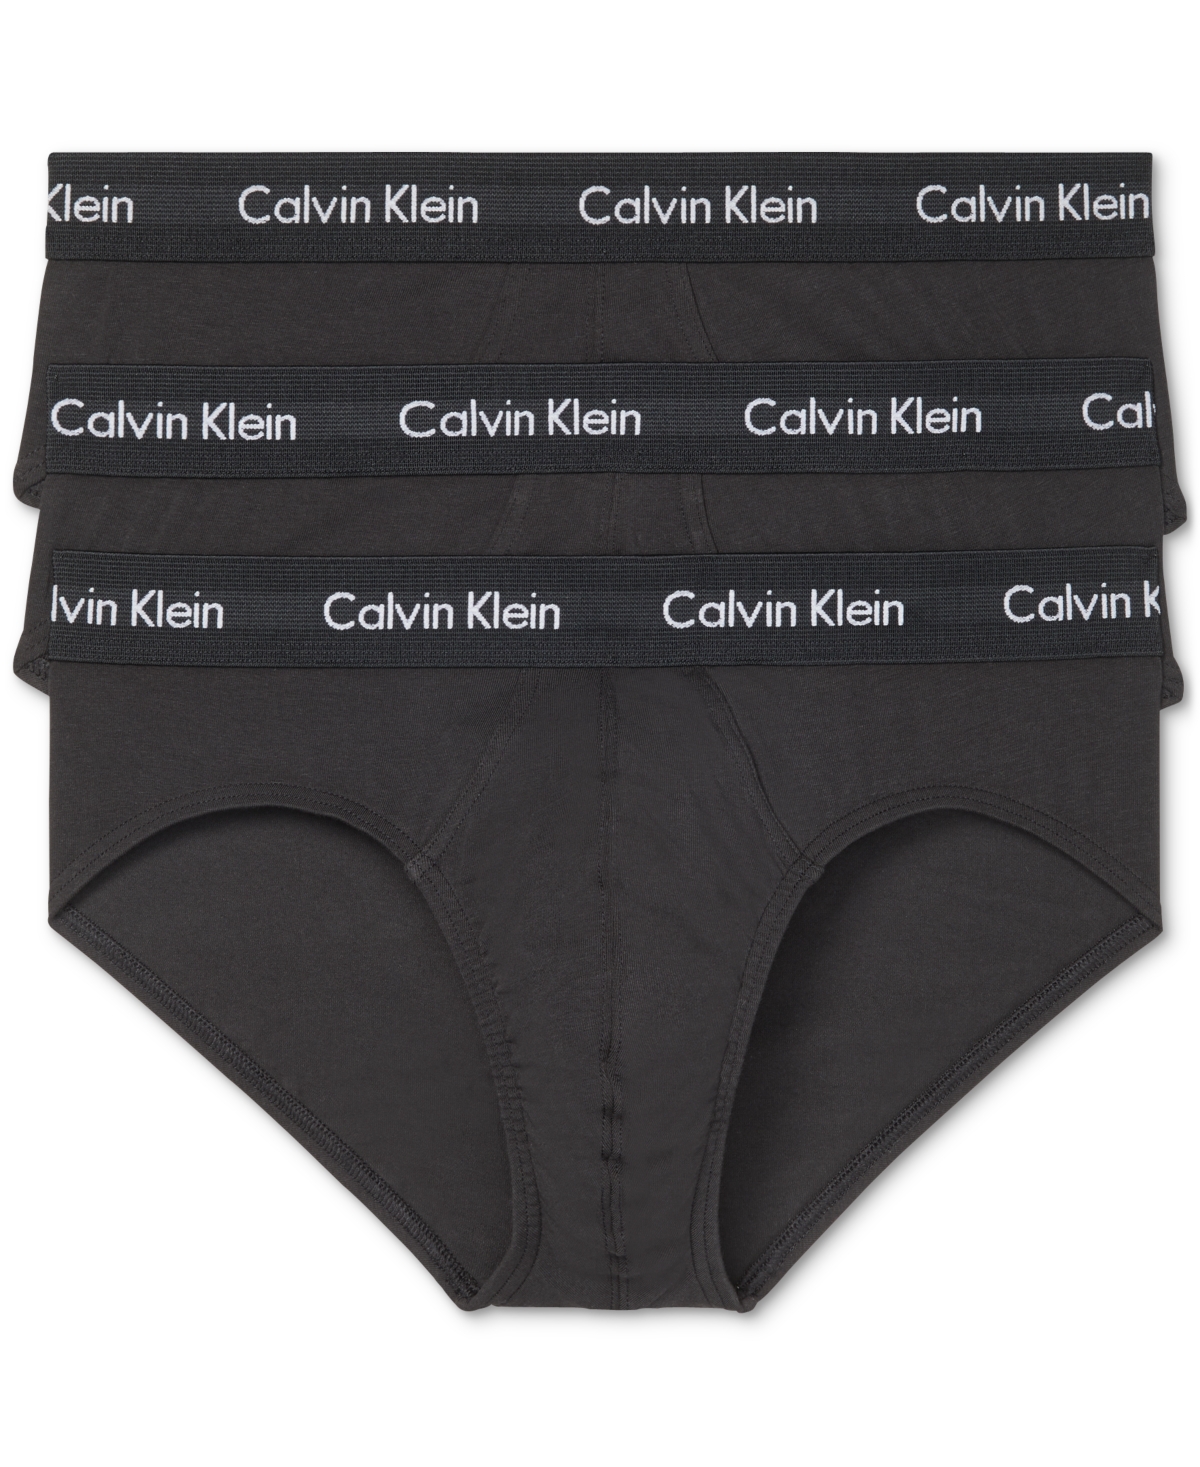 UPC 790812270554 product image for Calvin Klein Men's 3-Pack Cotton Stretch Briefs Underwear | upcitemdb.com